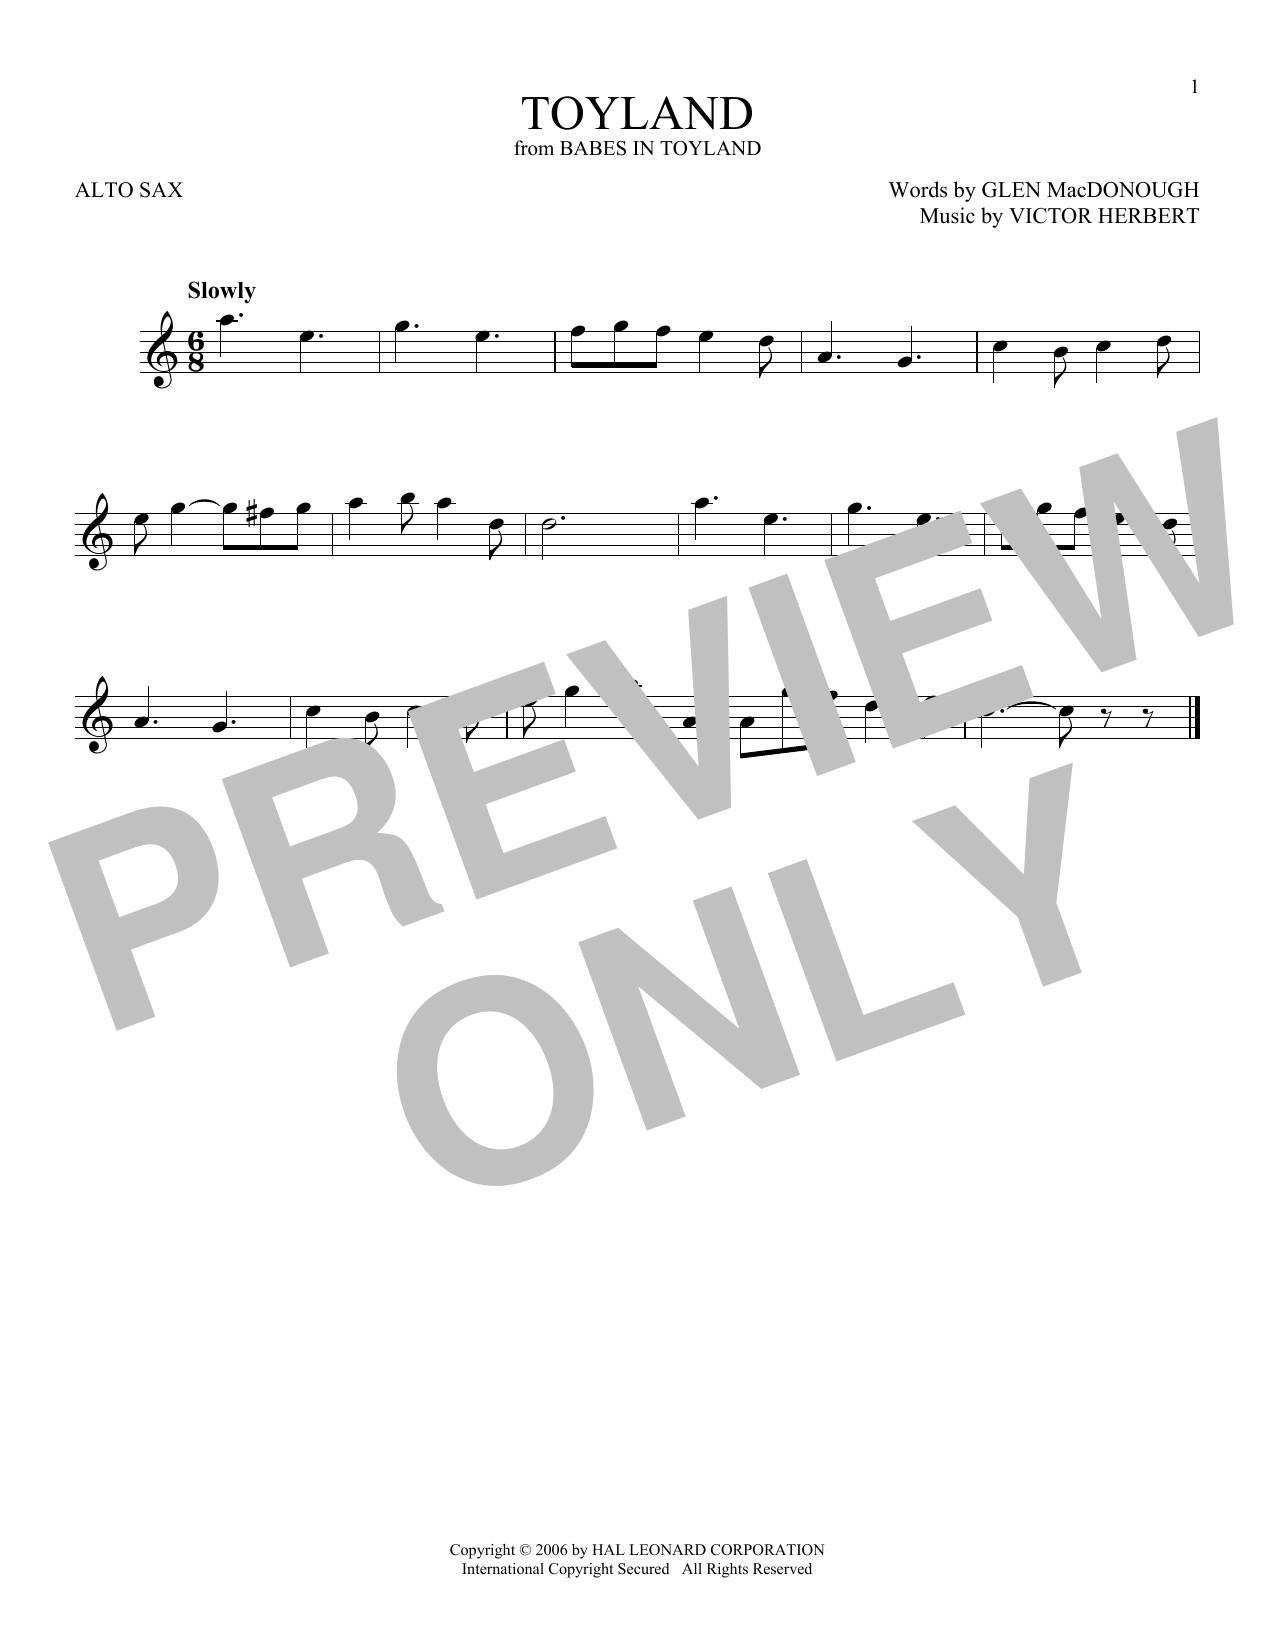 Victor Herbert Toyland Sheet Music Notes & Chords for Viola - Download or Print PDF